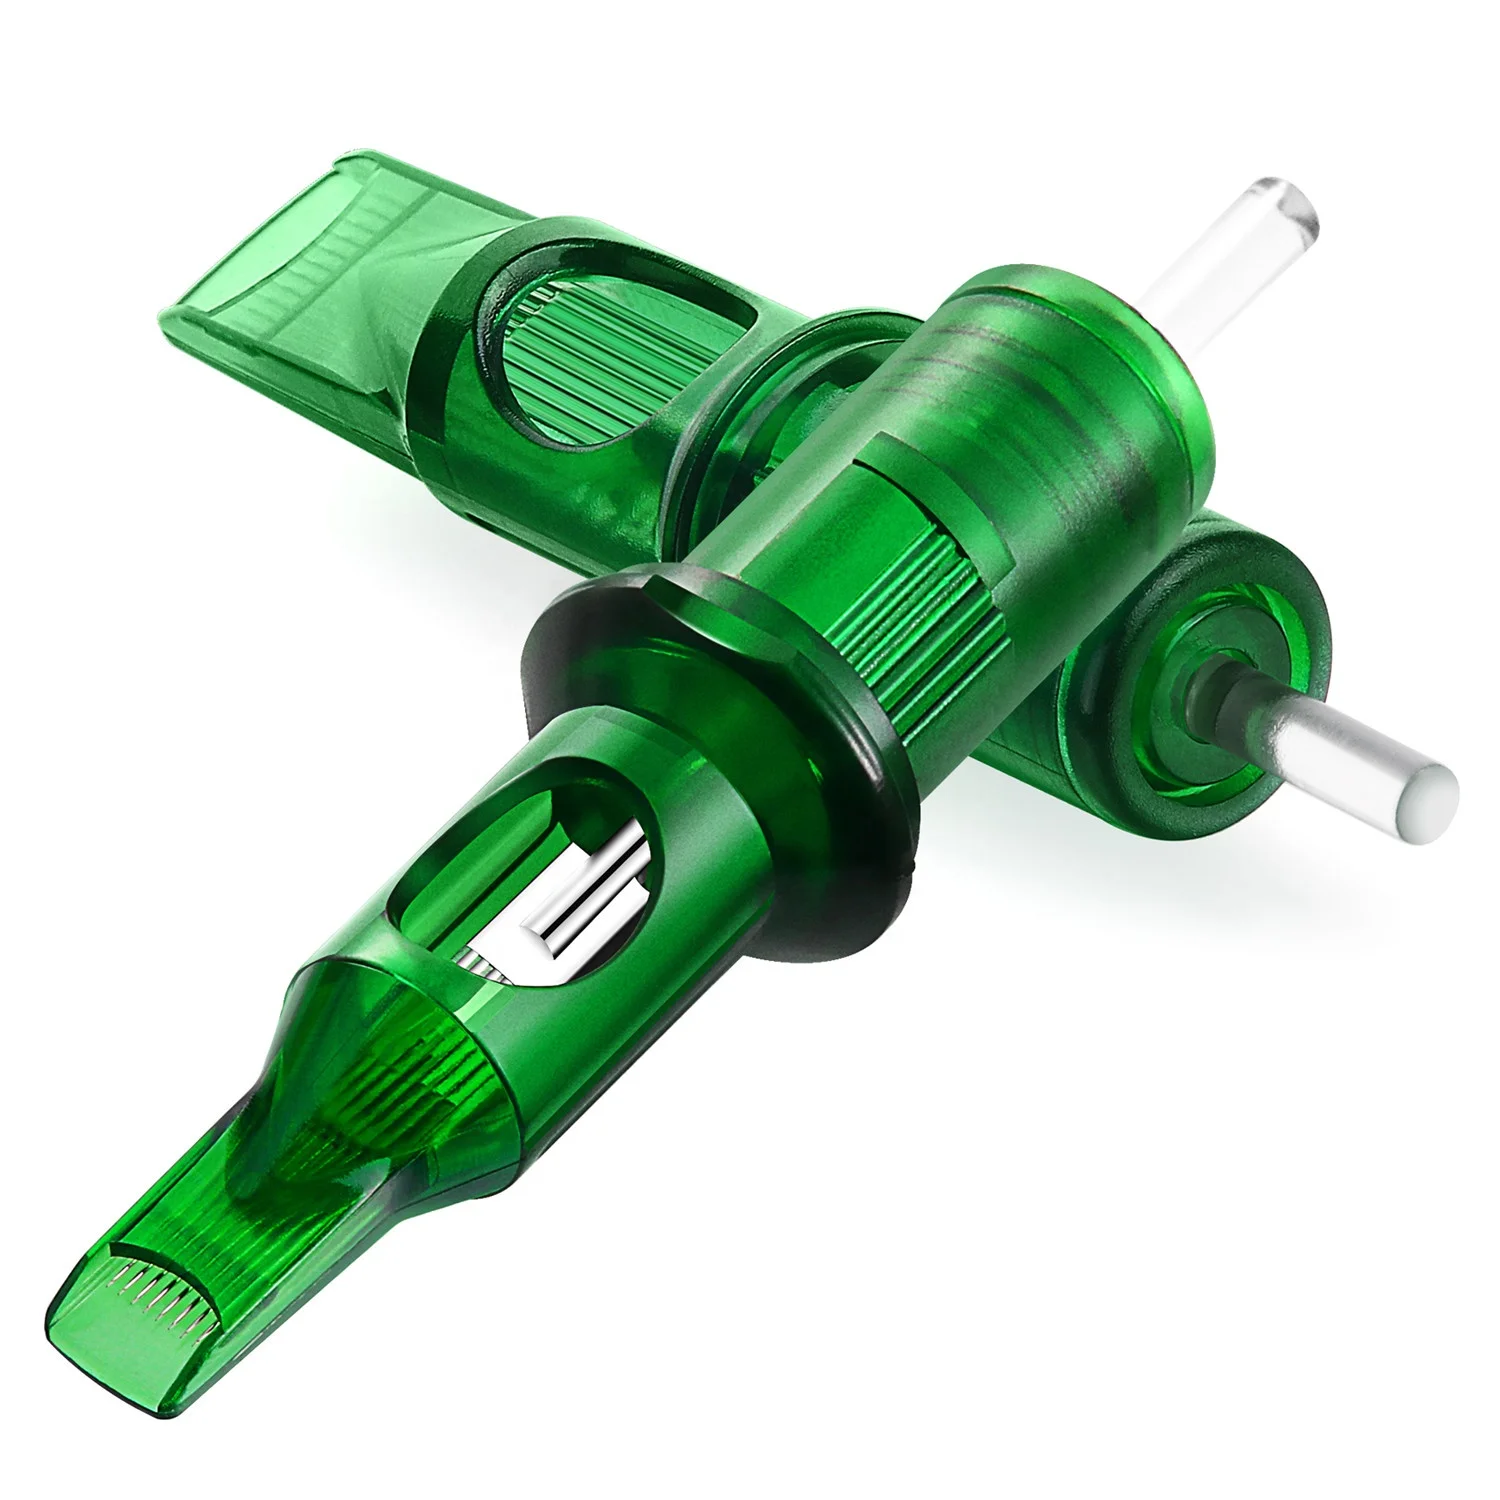 
2020 New Design Membrane System MVP Green Tattoo Needle Disposable Cartridges Tattoo Needle Cartridges 